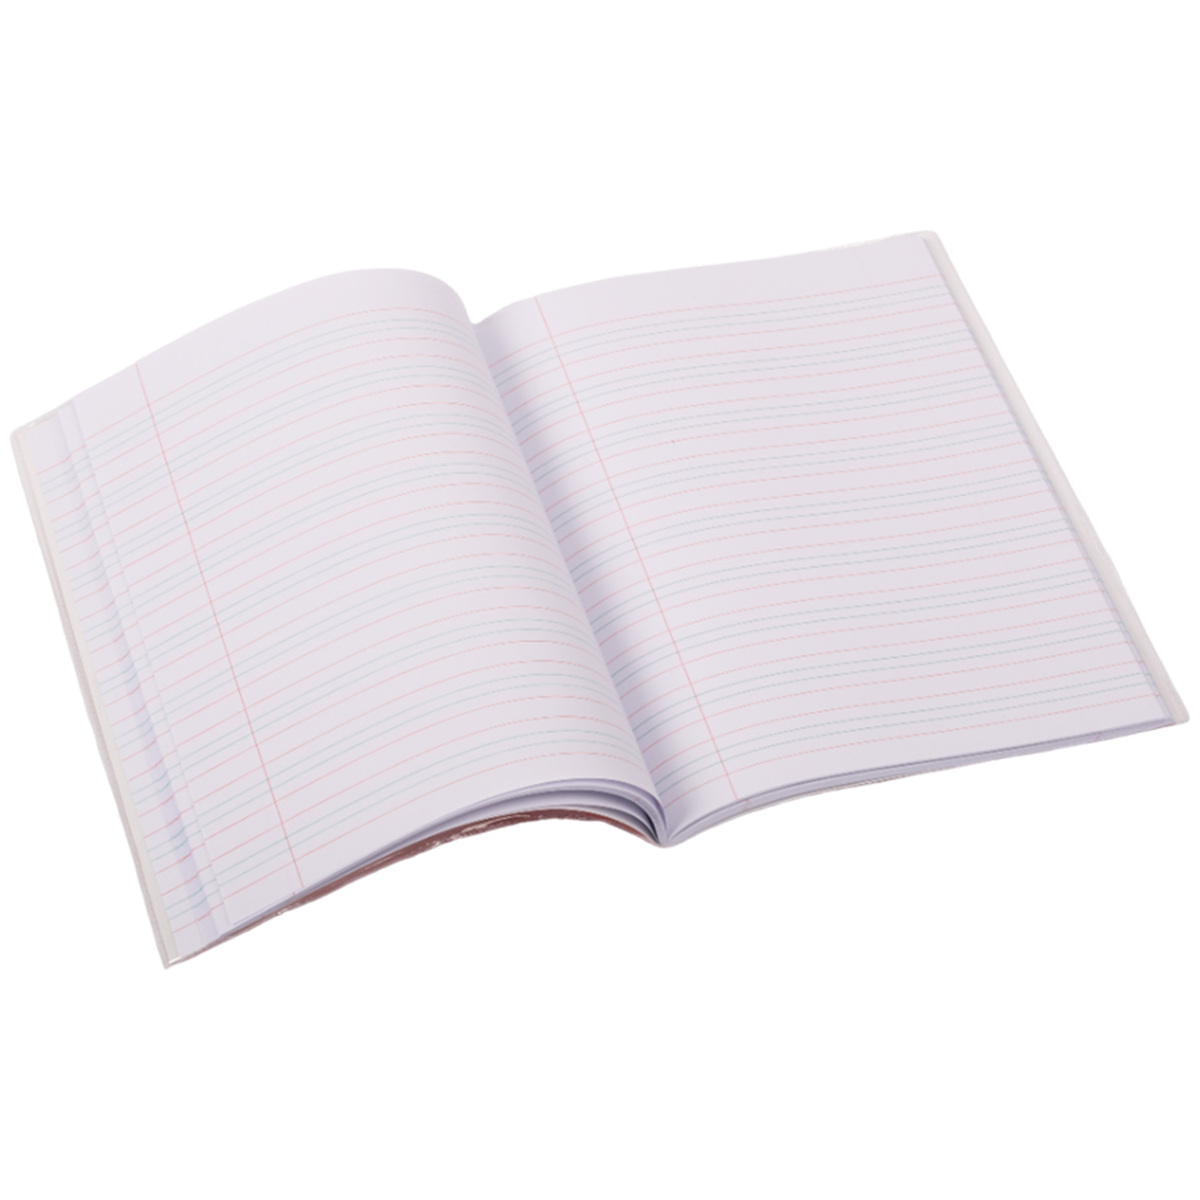 Sadaf Notebook Brown Cover Four Line 60 Sheets